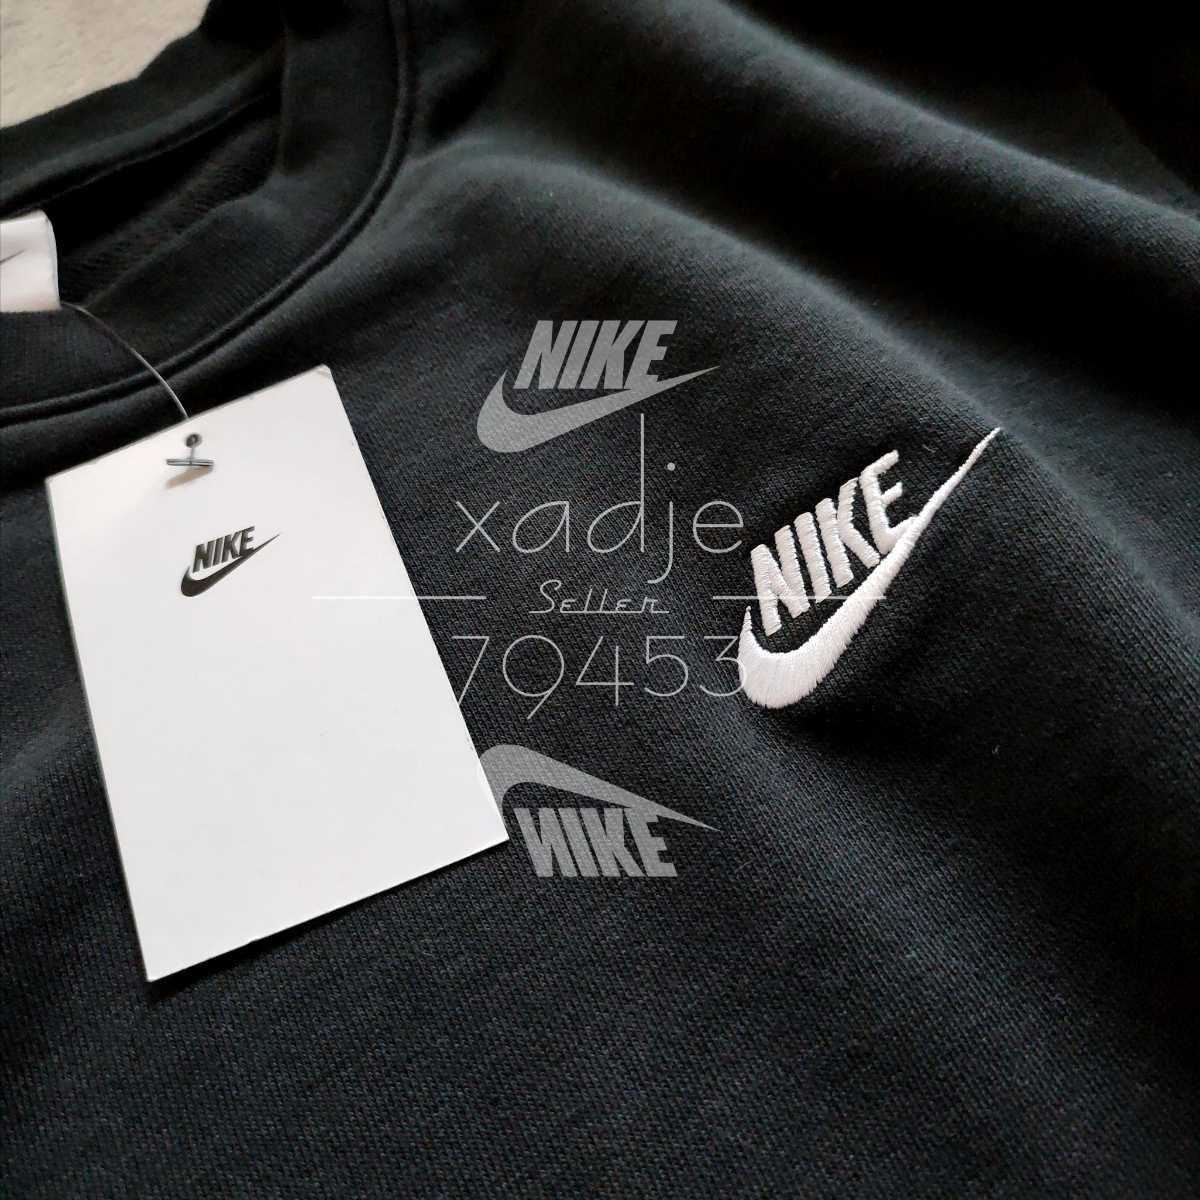  new goods regular goods NIKE Nike sweat top and bottom set sweatshirt sweat pants Logo embroidery setup black black white ...M